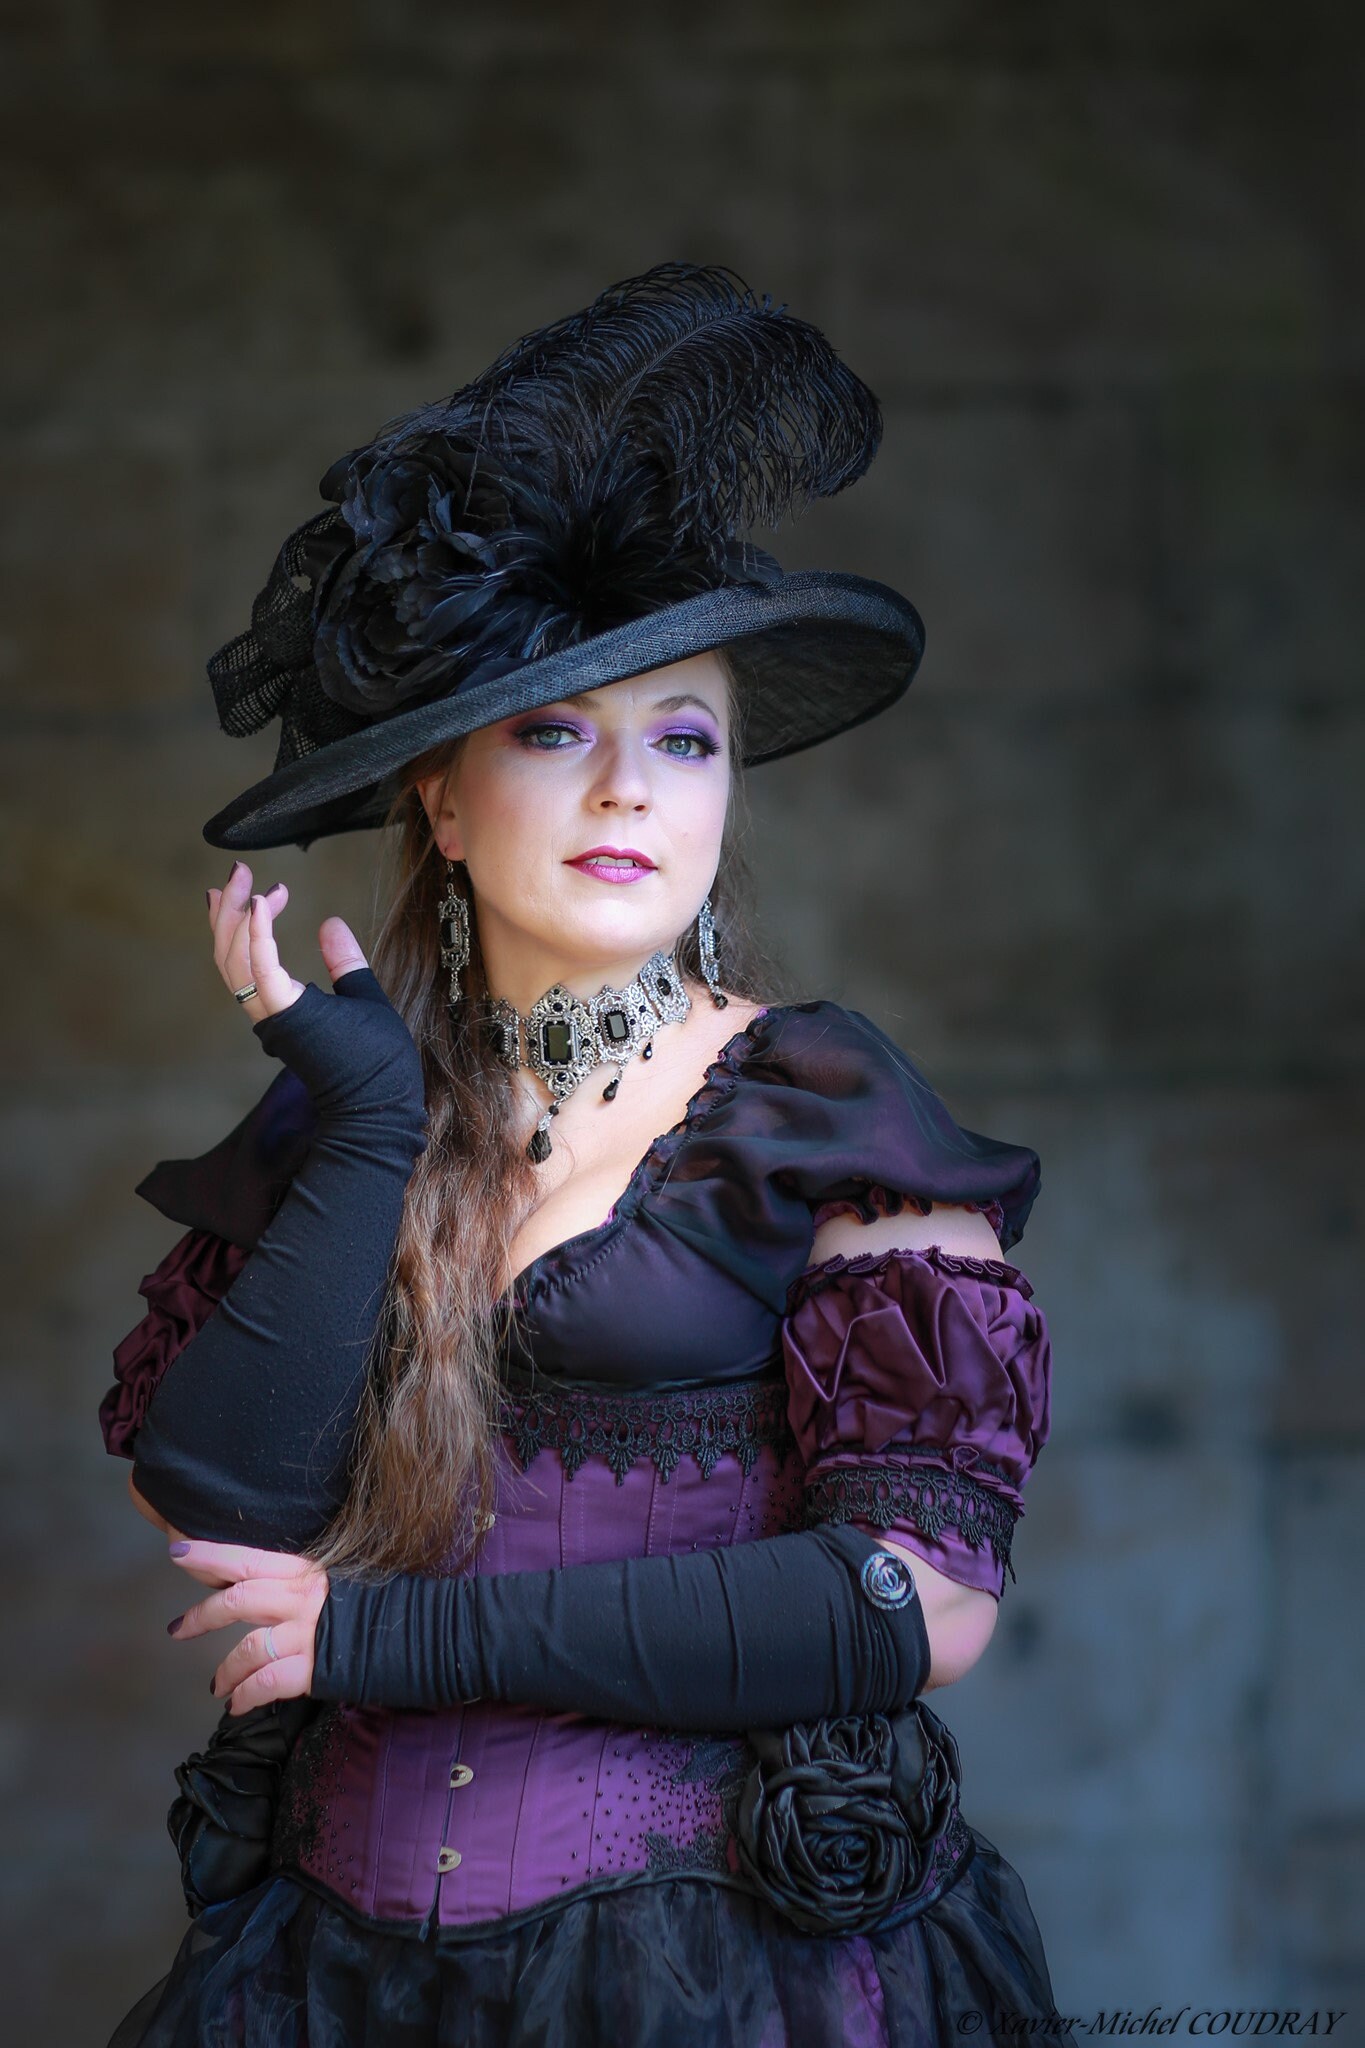 Stock - Gothic baroque magic smoke lady by S-T-A-R-gazer on DeviantArt